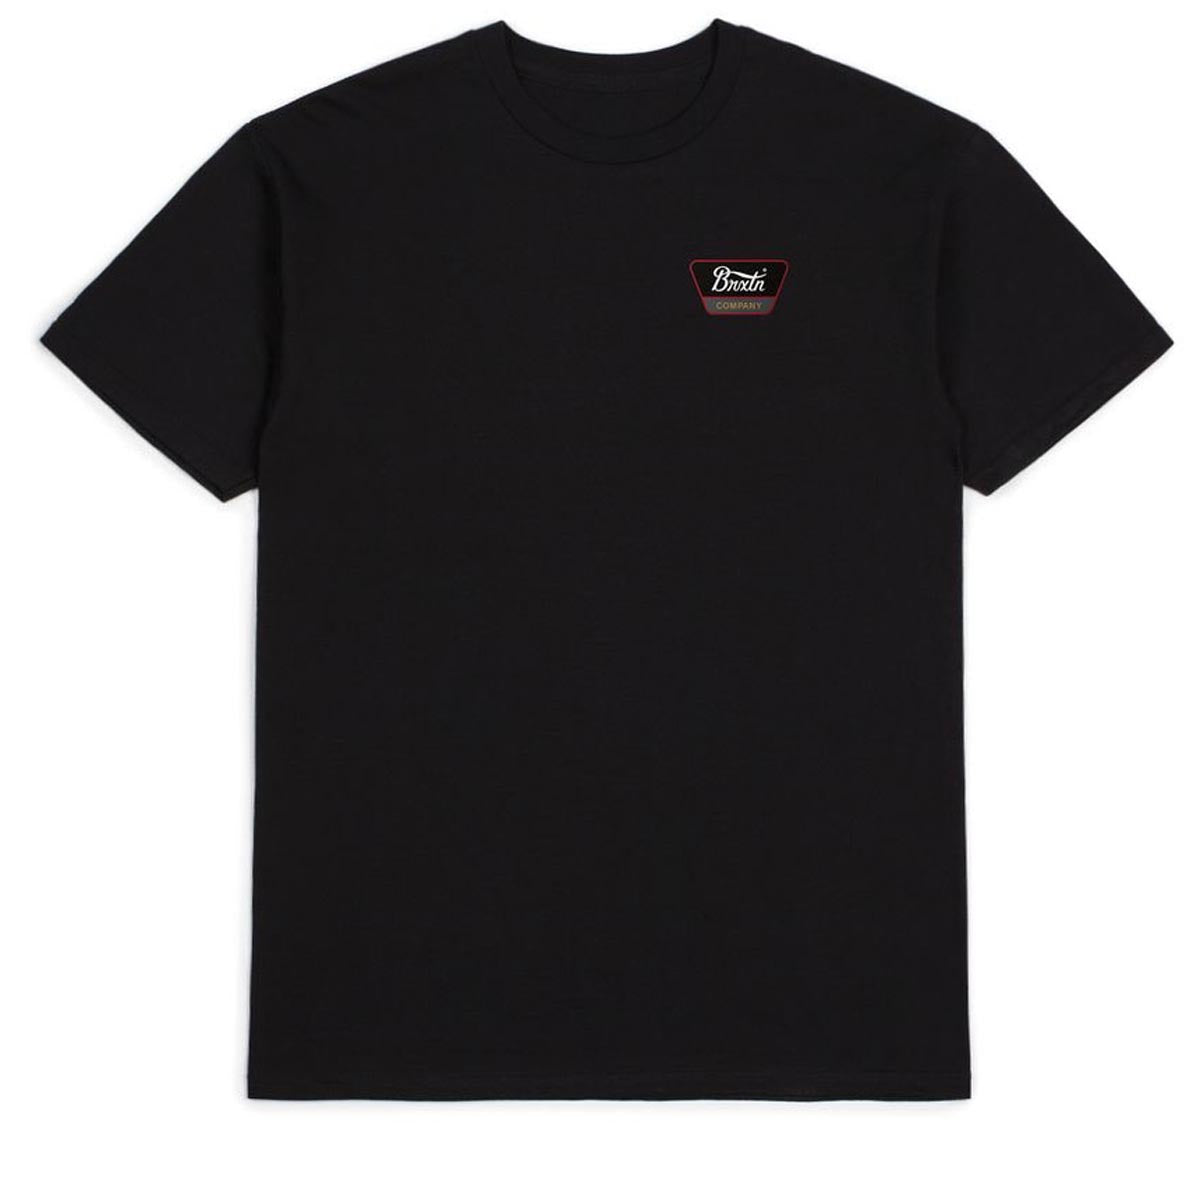 Brixton Linwood T-Shirt - Black/Casa Red/White image 1